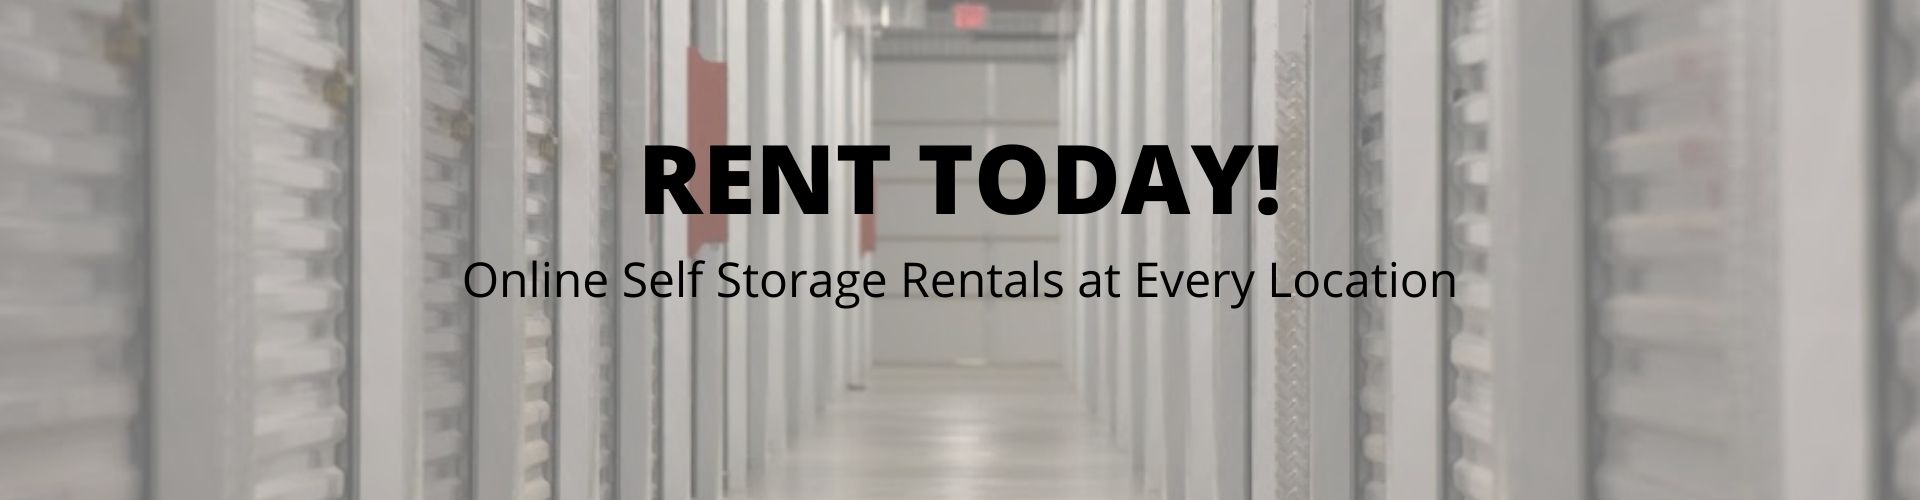 online storage rentals at South End Self Storage